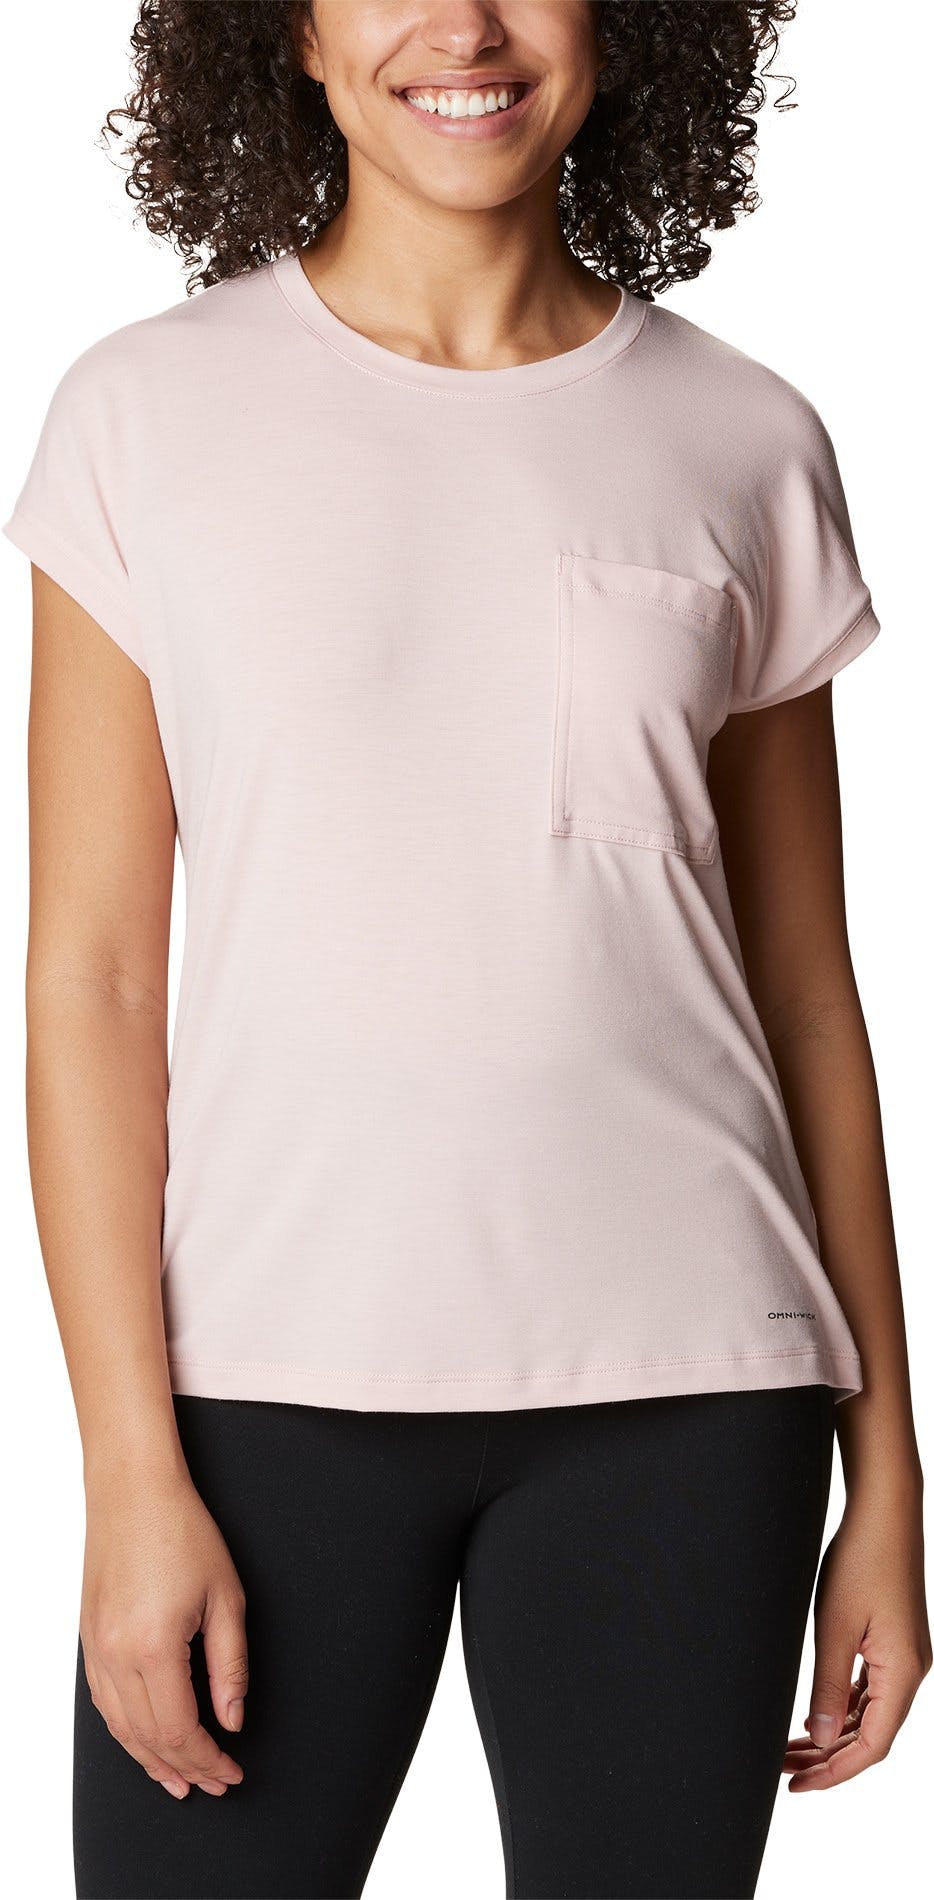 Product image for Boundless Trek Short Sleeve T-Shirt - Women's